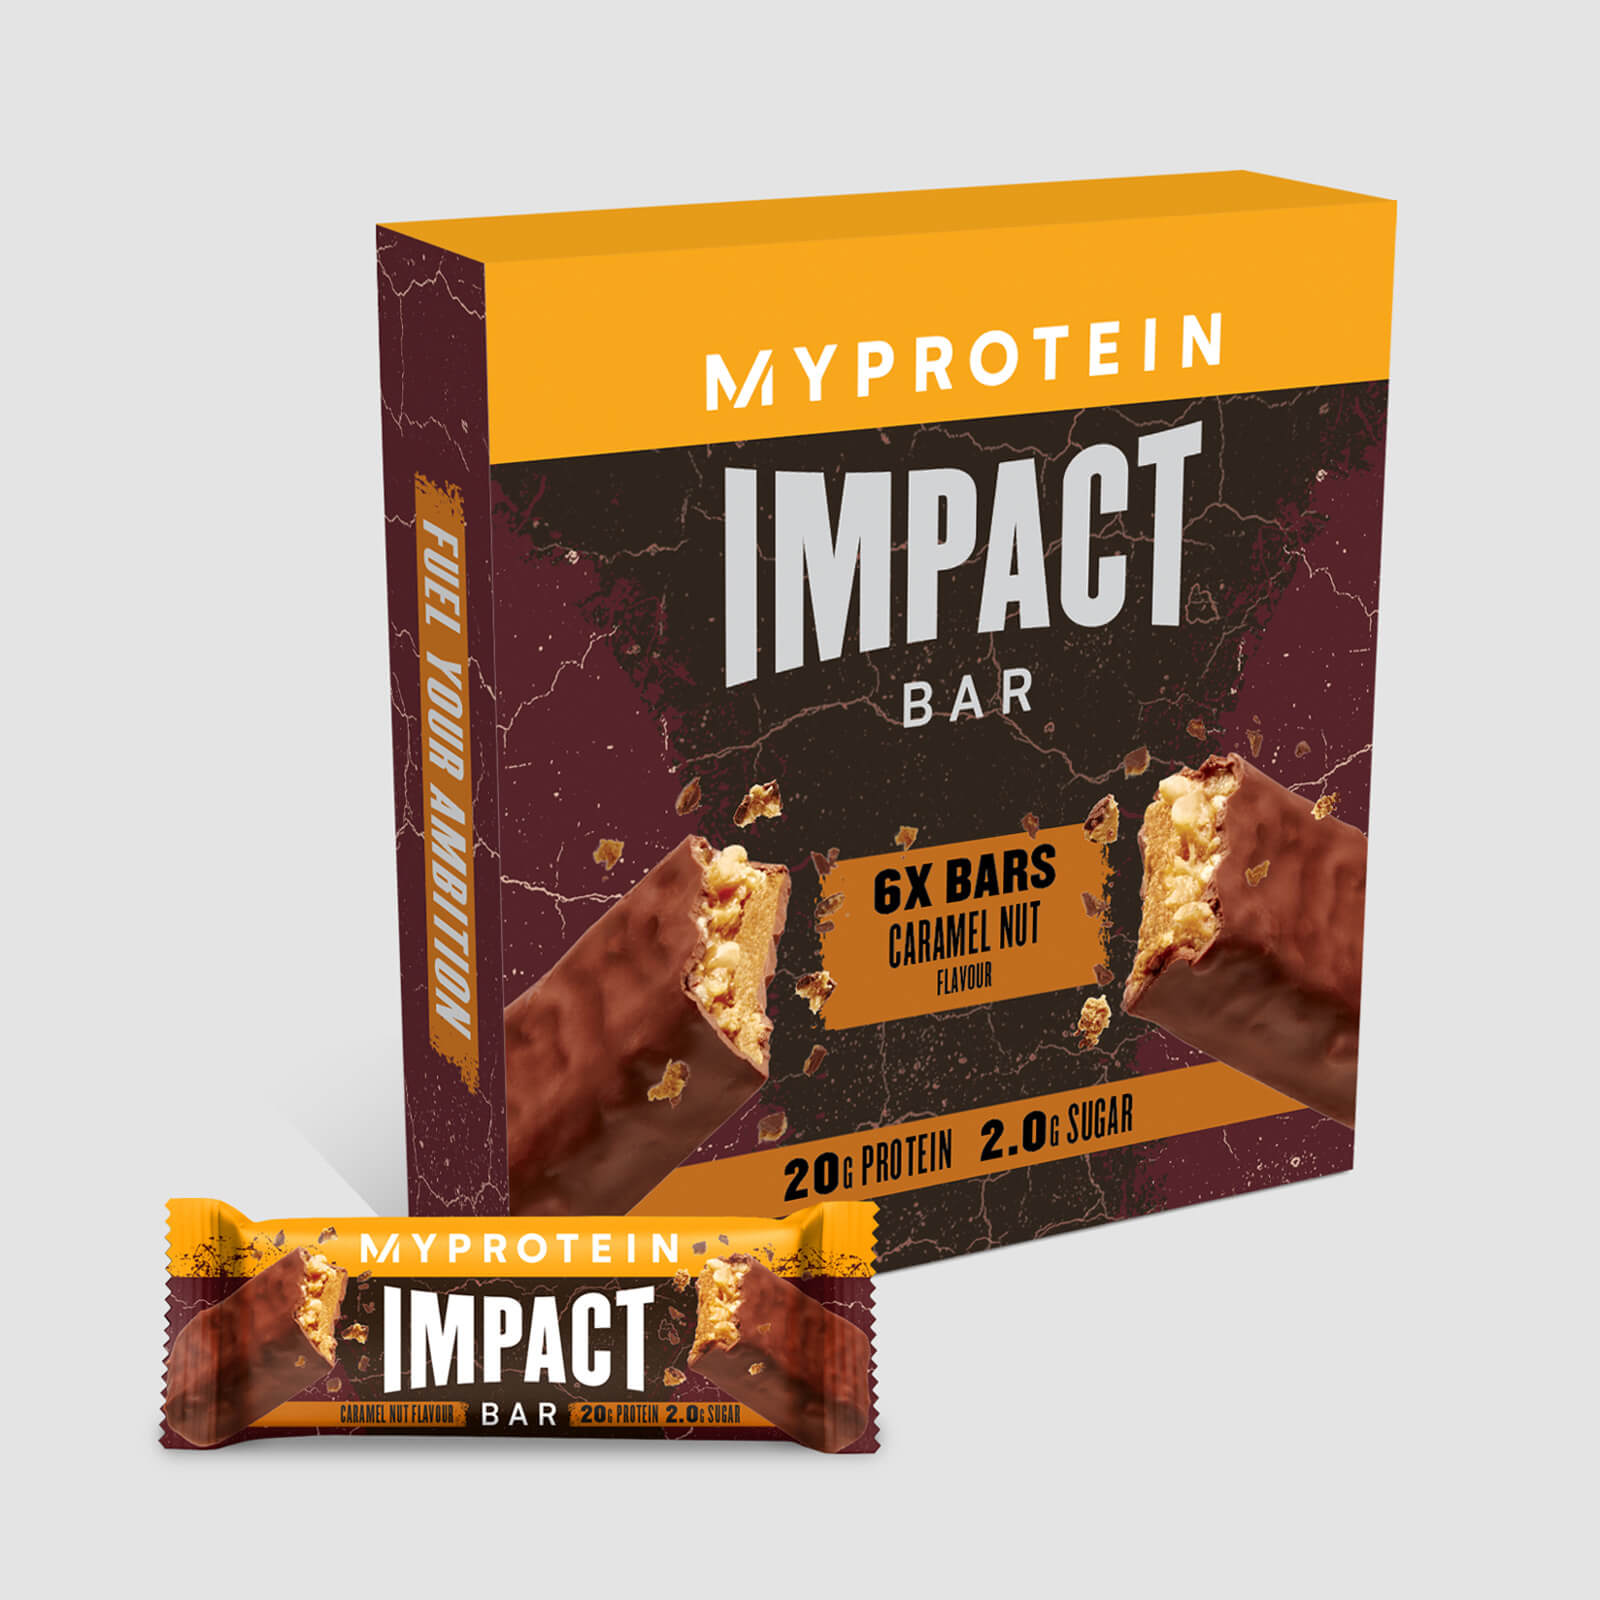 Myprotein Impact Protein Bar - 6Bars - Caramel Nut